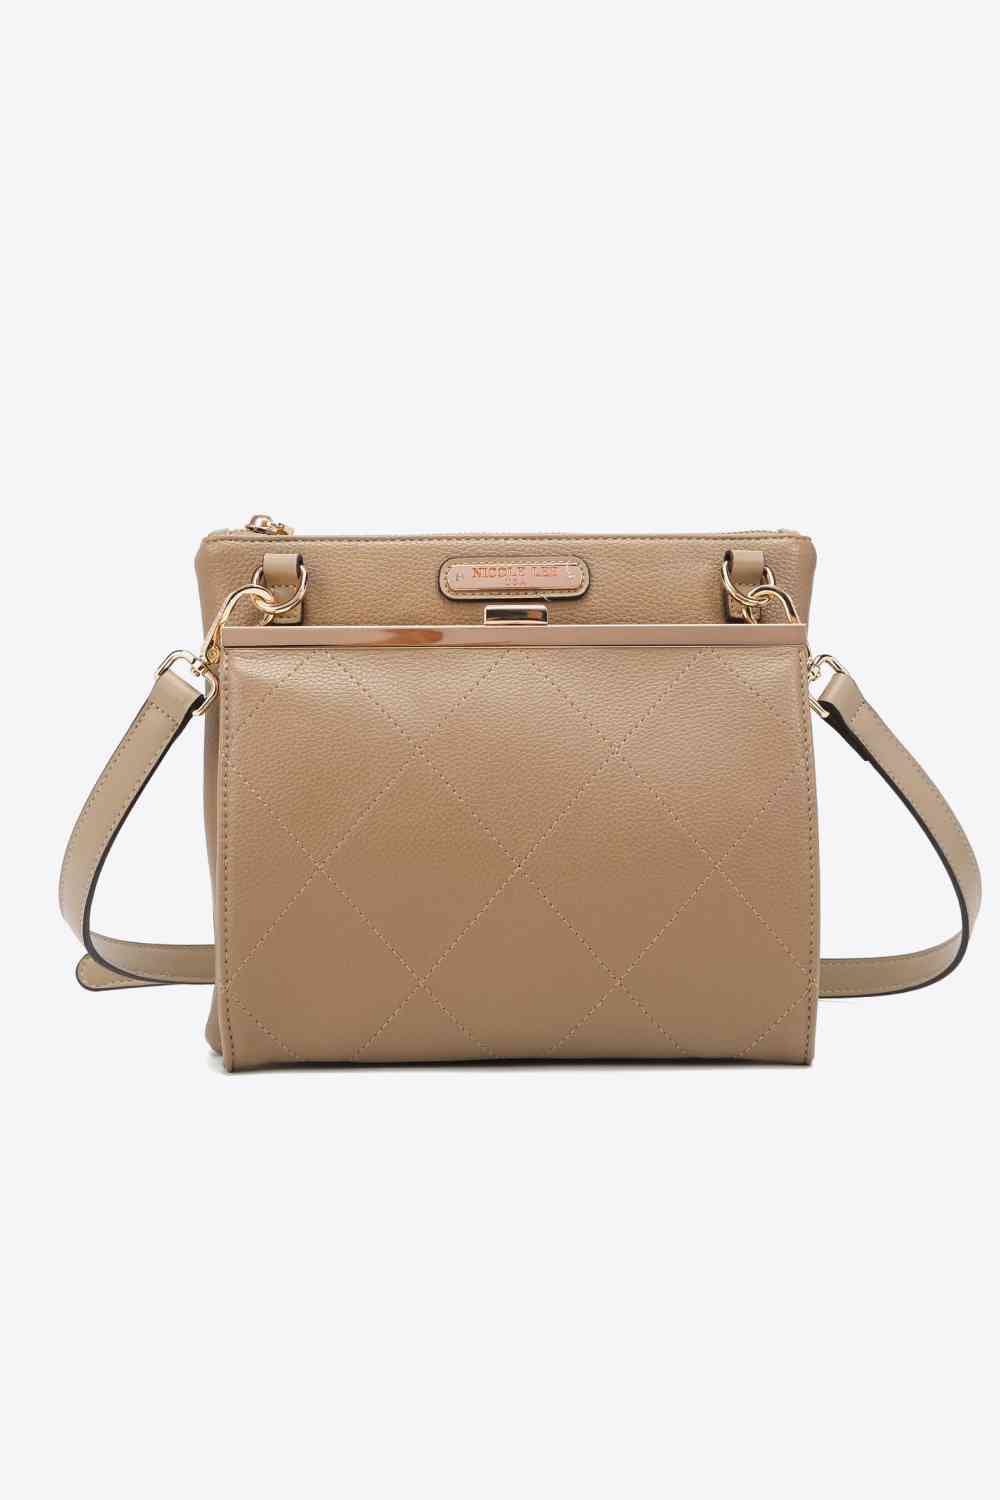 Nicole Lee USA All Day, Everyday Handbag Taupe / One Size